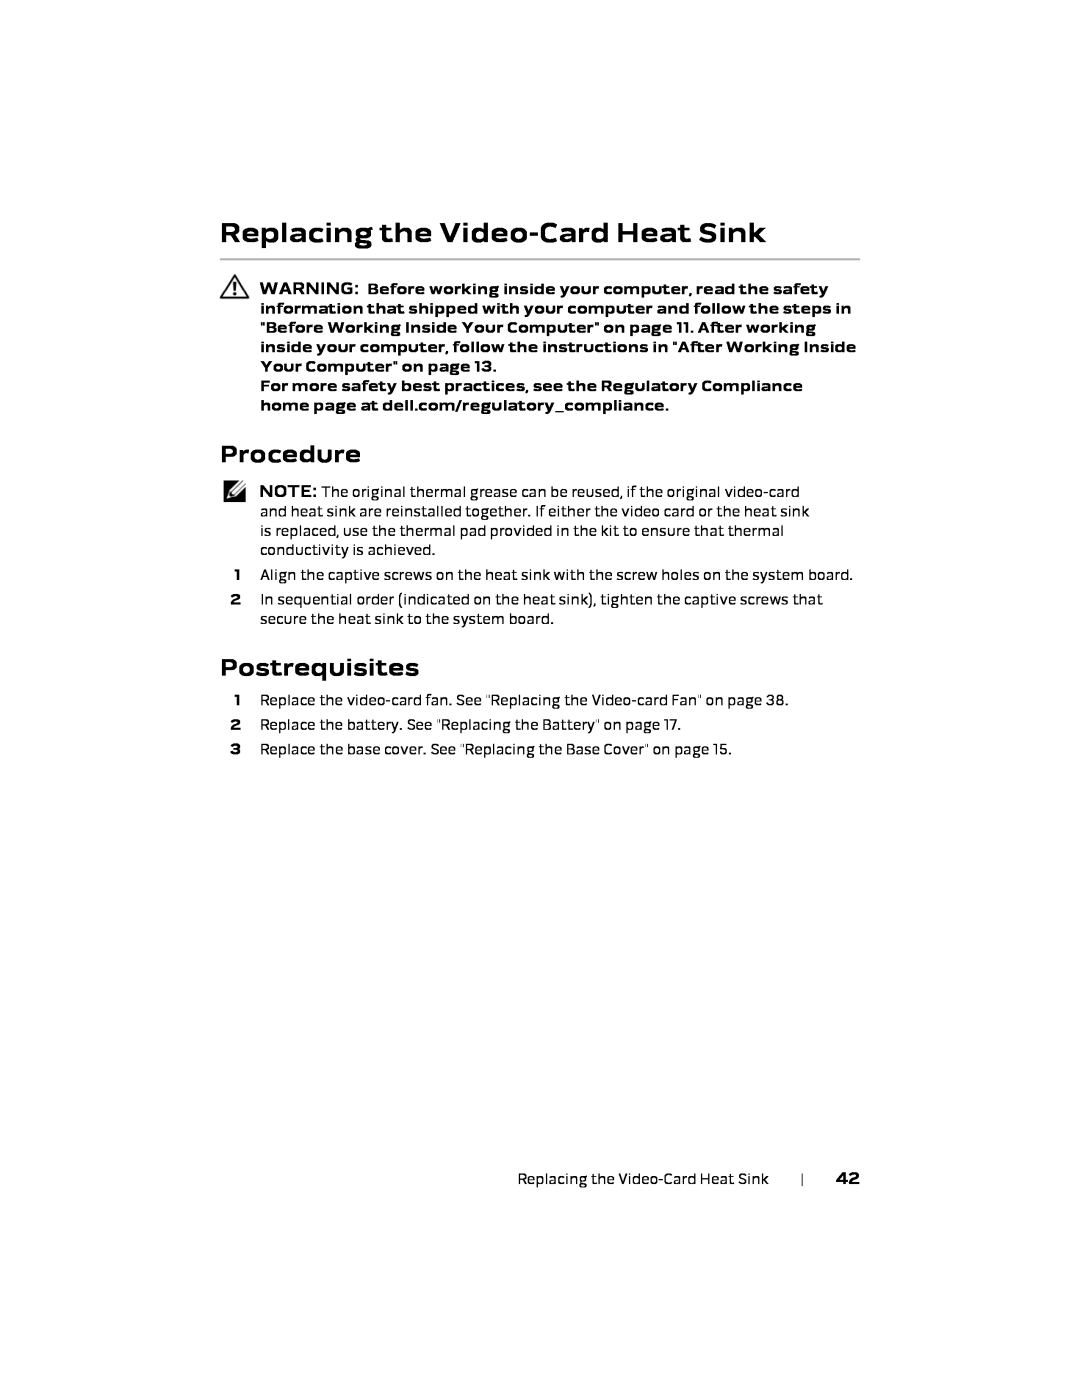 Alienware P18E, 17 R1 owner manual Replacing the Video-Card Heat Sink, Procedure, Postrequisites 